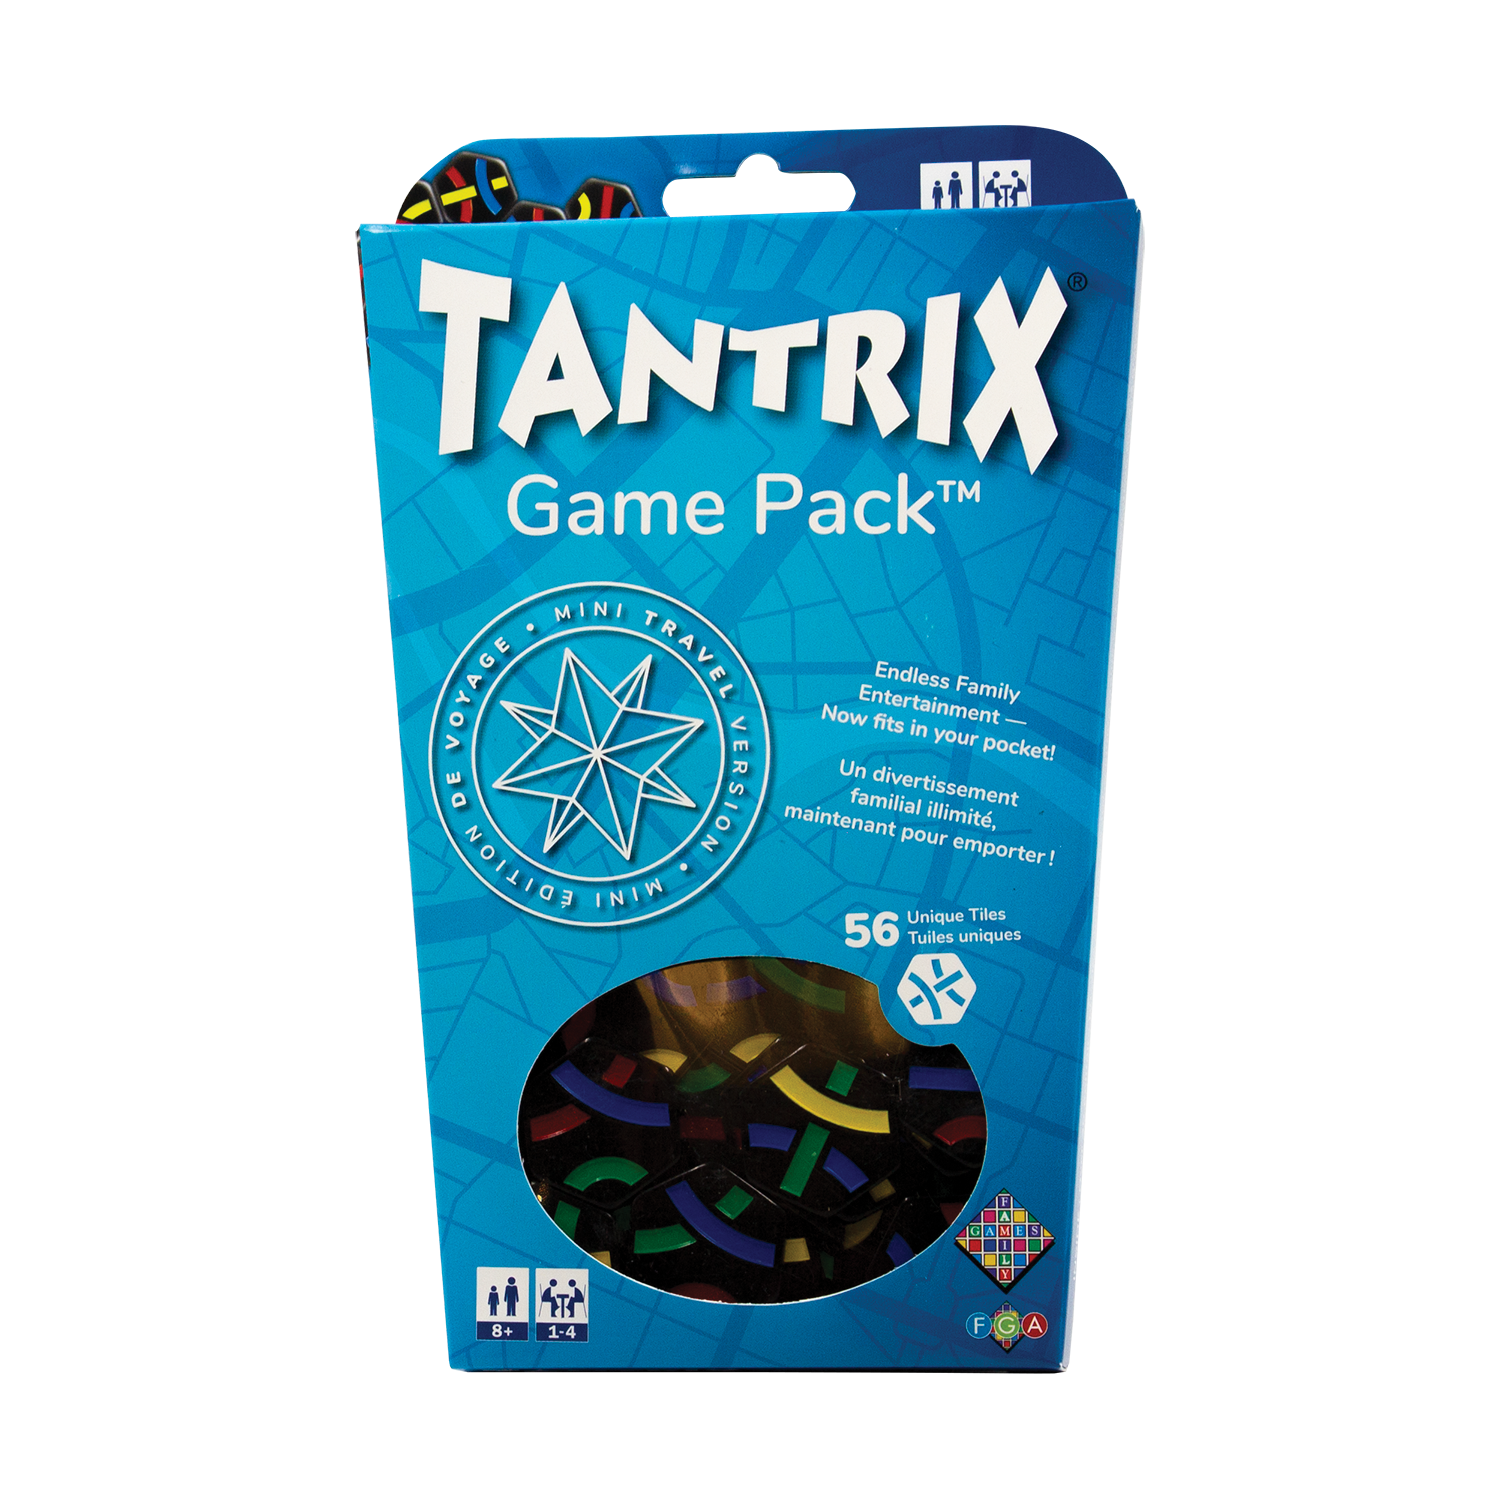 Tantrix Match!, Brain Teaser Puzzle